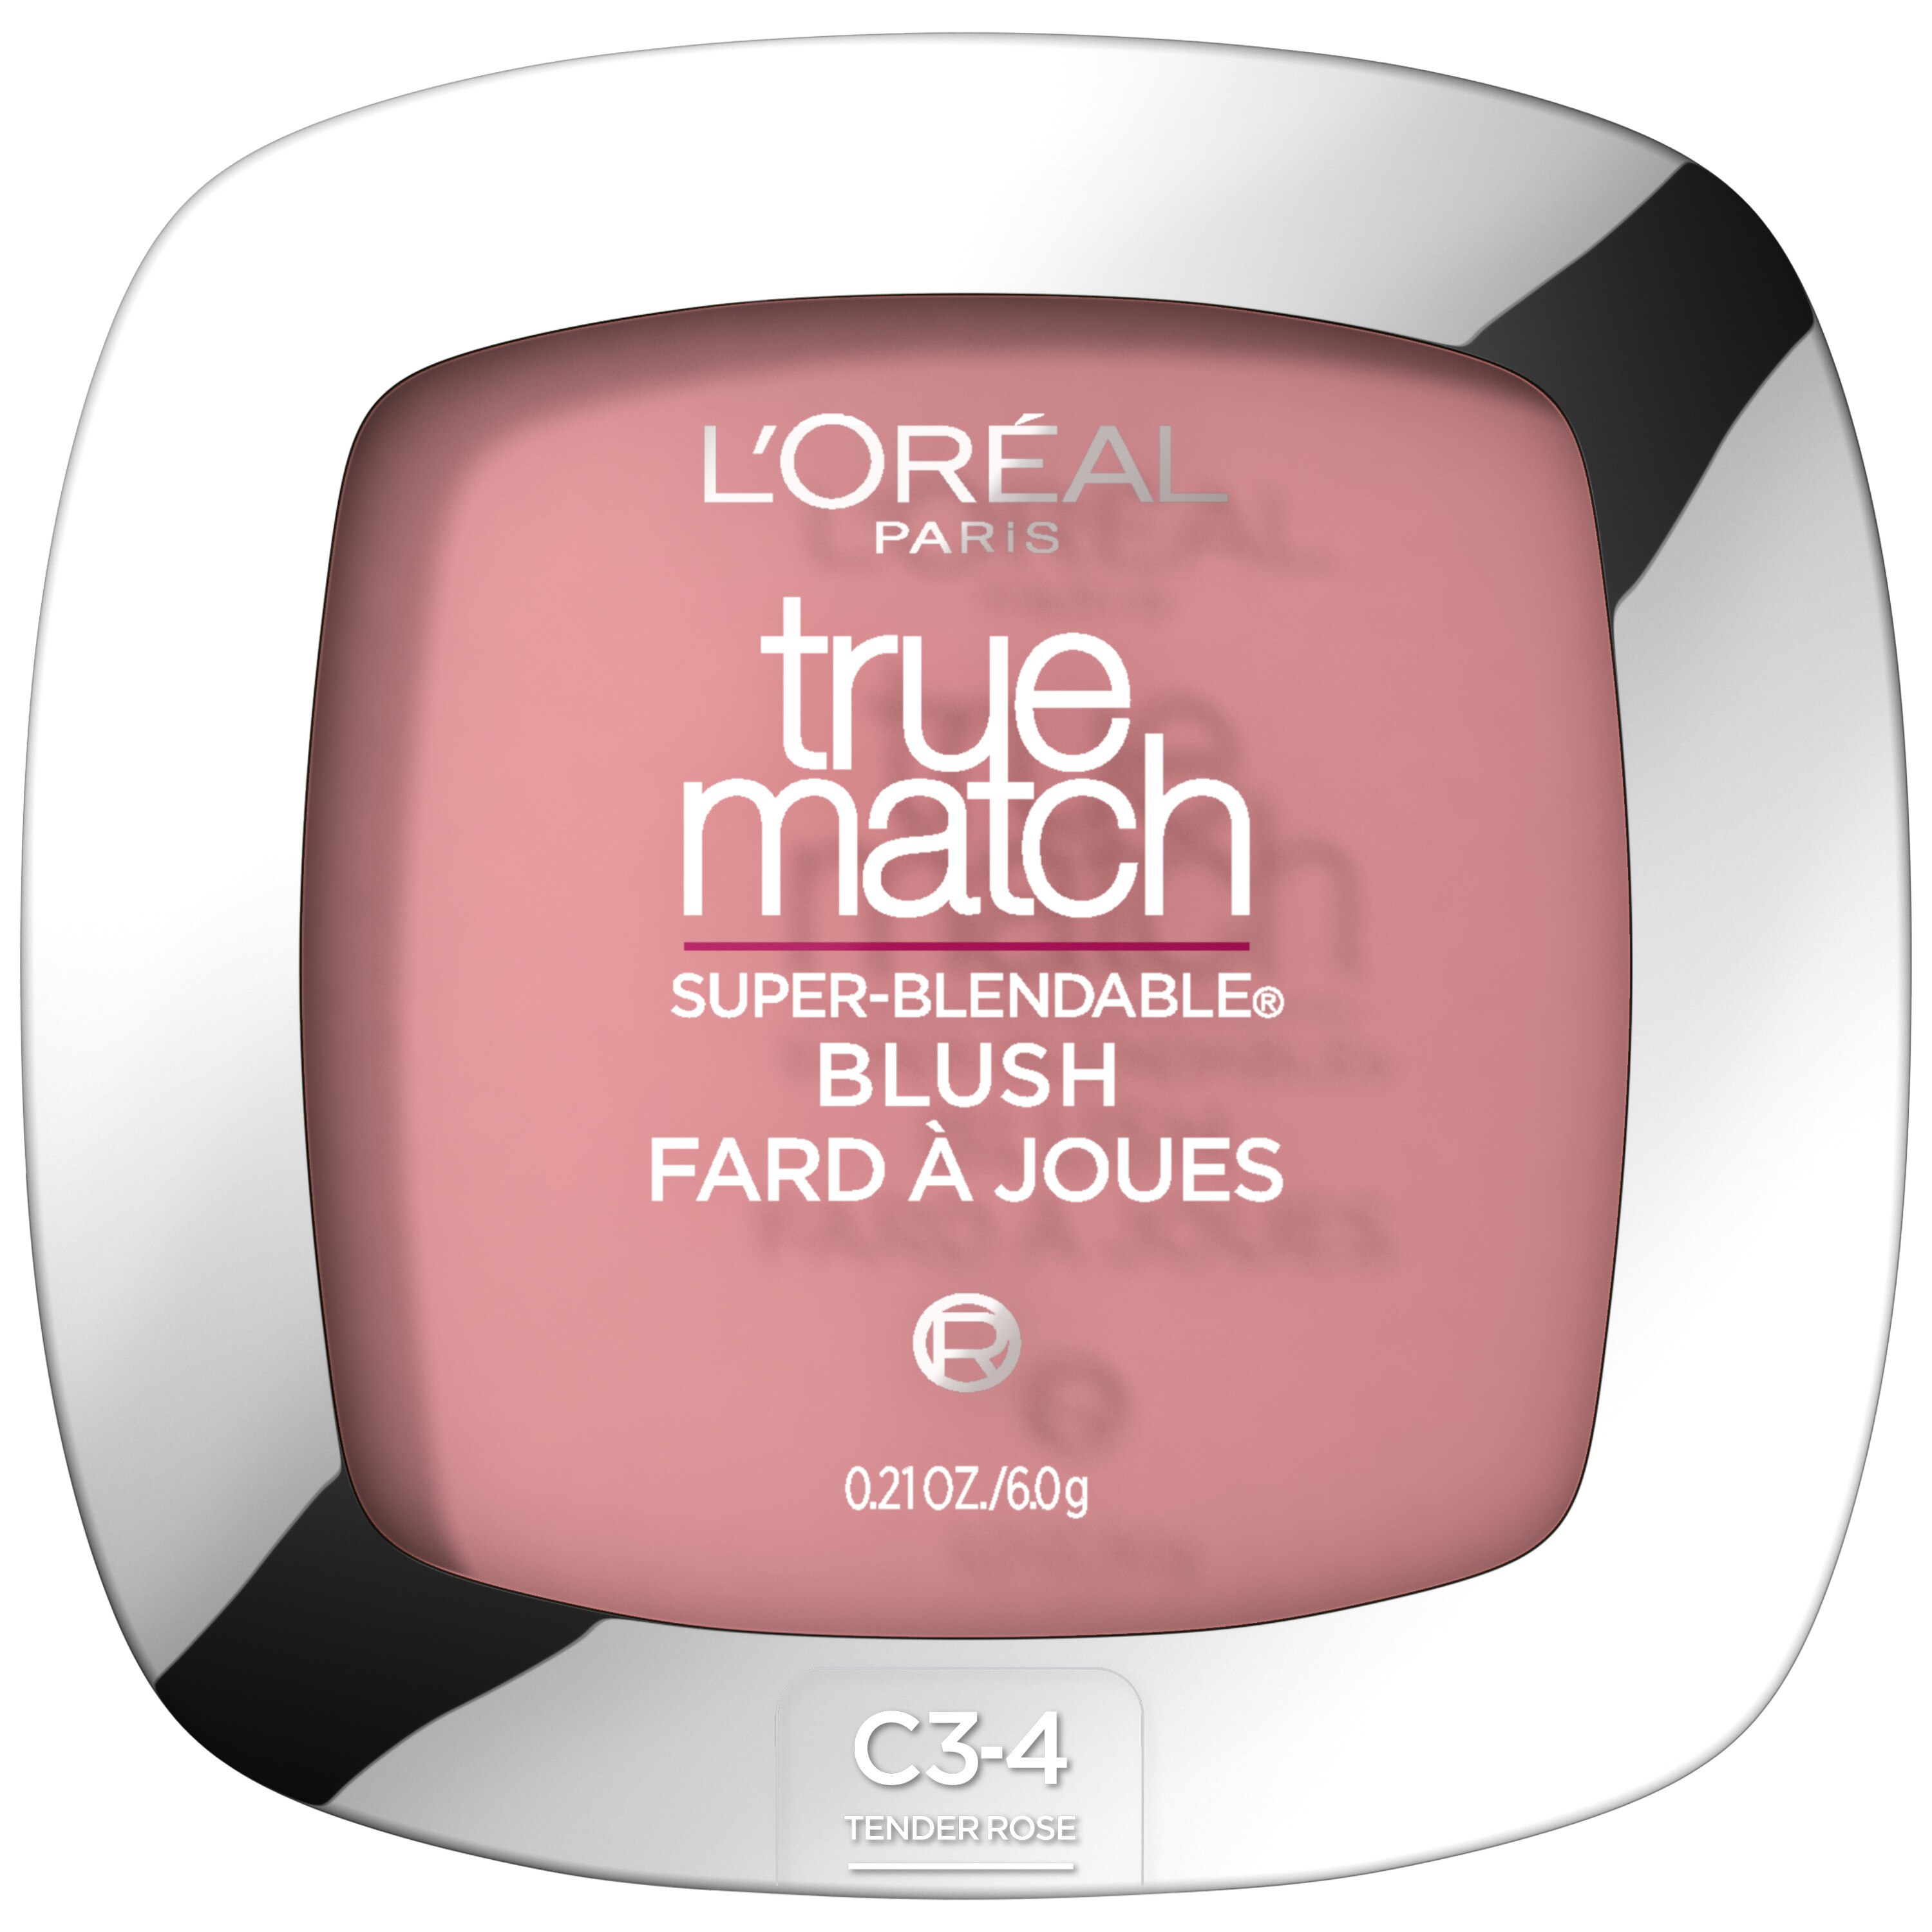 L'Oreal Paris True Match Super-Blendable Blush, C3-4 Tender Rose , CVS